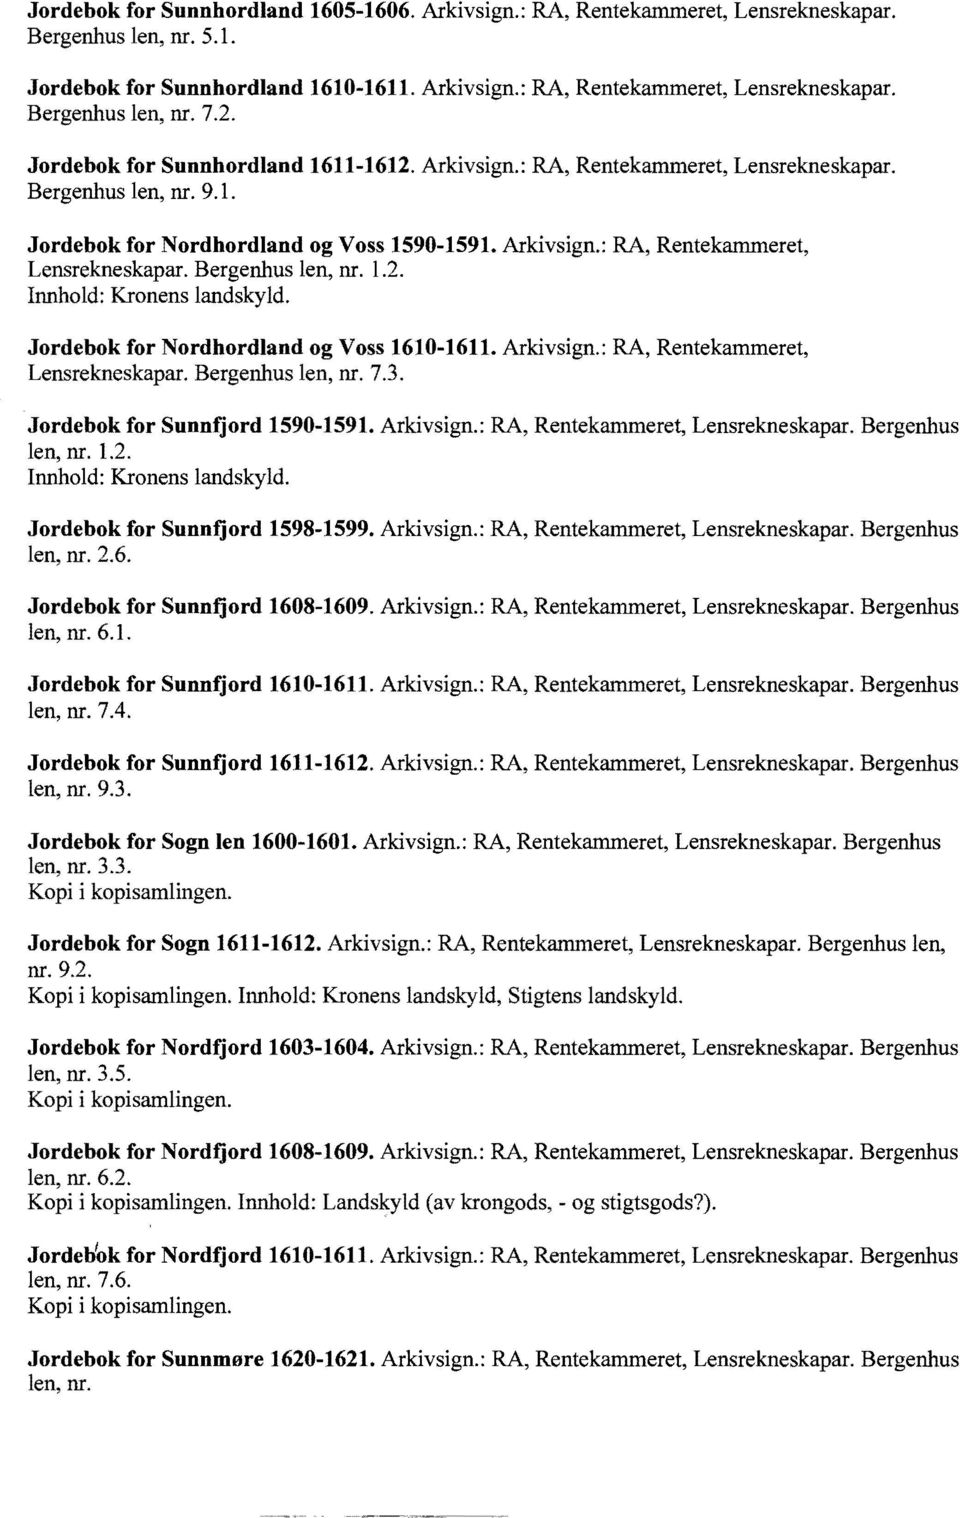 Jordebok for Nordhordland og Voss 1610-1611. Arkivsign.: RA, Rentekammeret, Lensrekneskapar. Bergenhus len, nr. 7.3. Jordebok for Sunnfjord 1590-1591. Arkivsign.: RA, Rentekammeret, Lensrekneskapar. Bergenhus len, nr. 1.2.